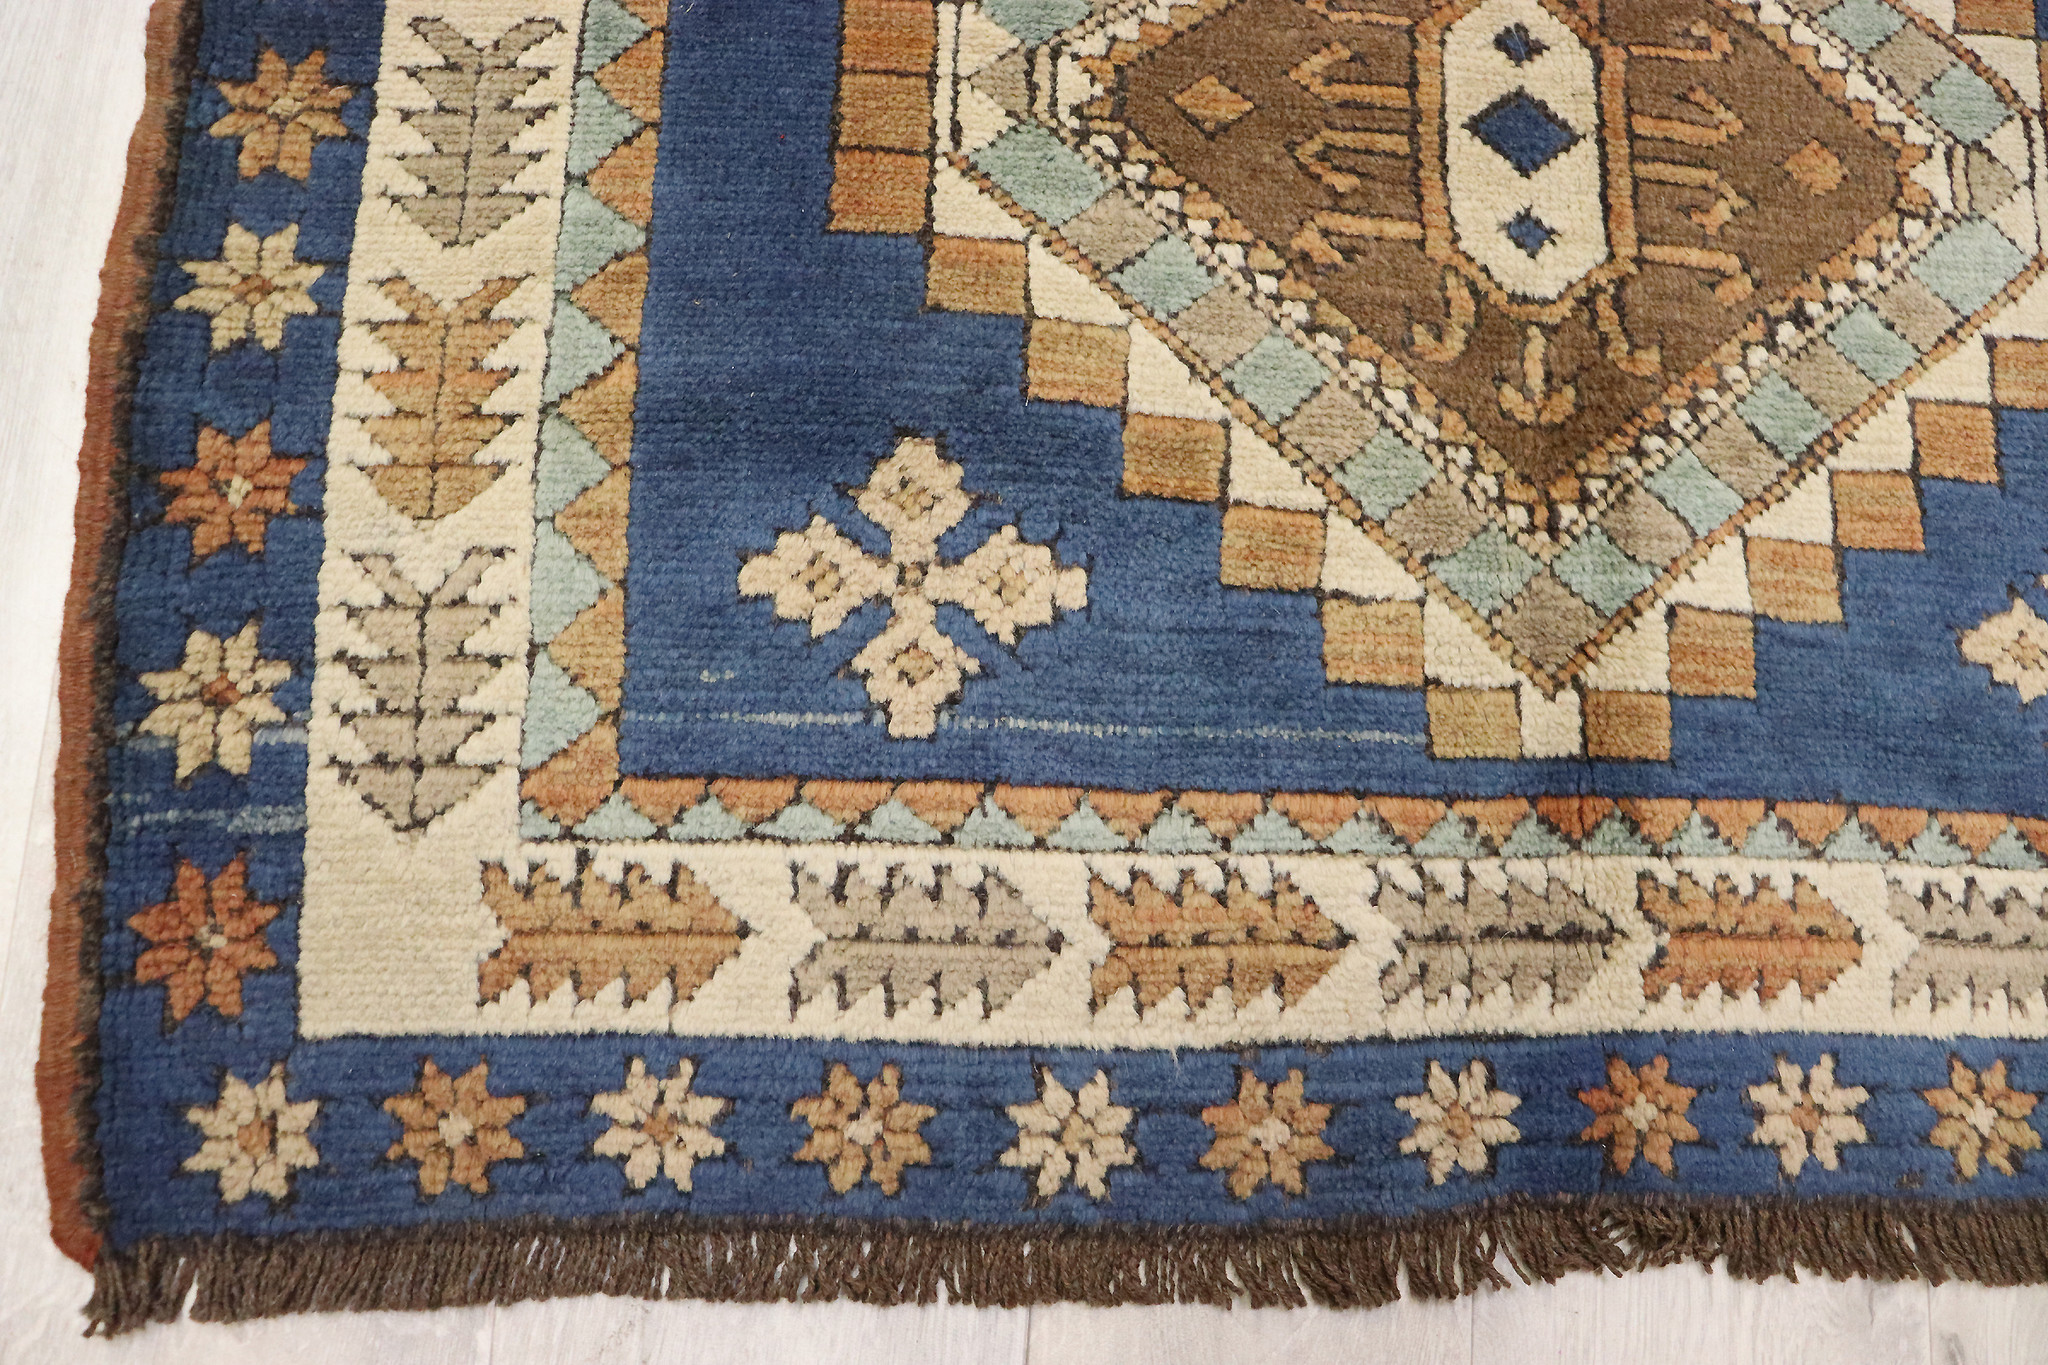 170x120 cm Vintage hand knotted Turkish Kars oriental carpet No: TRK-3